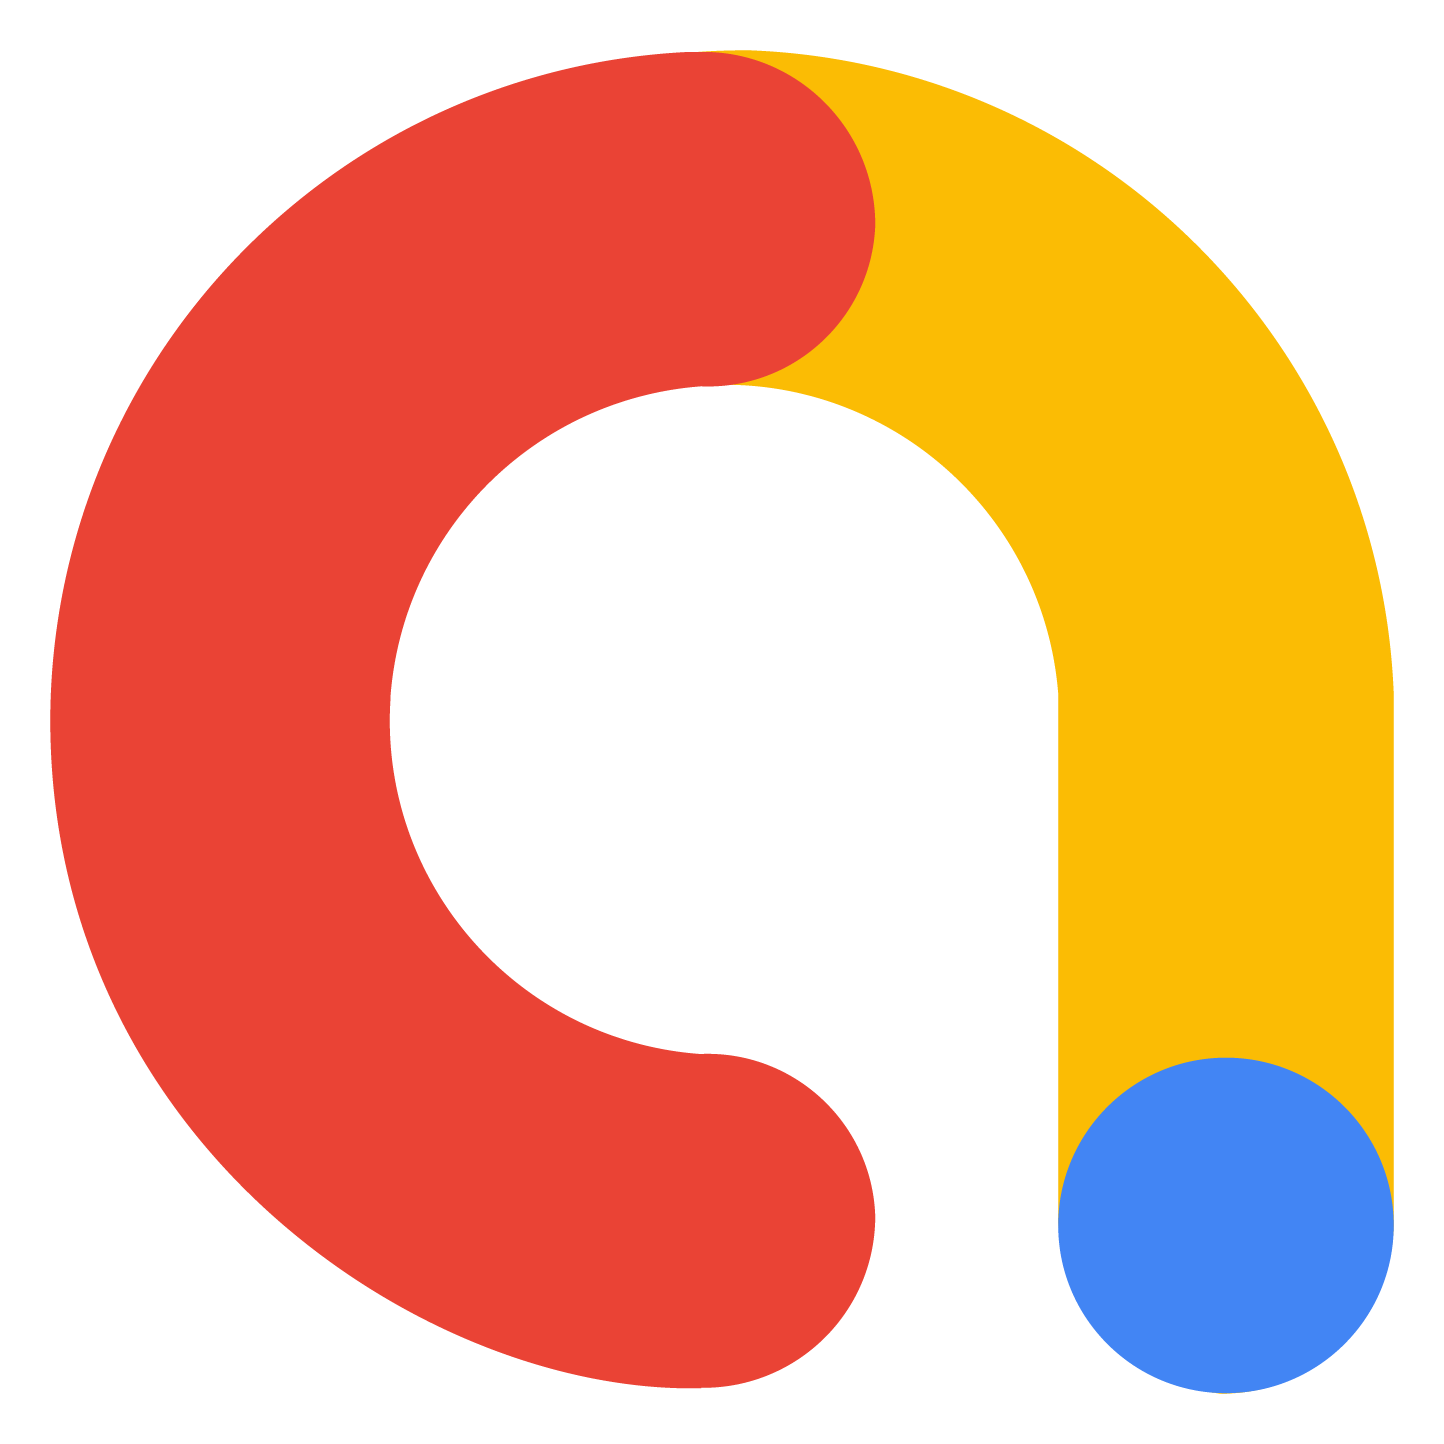 Google Admob Logo png